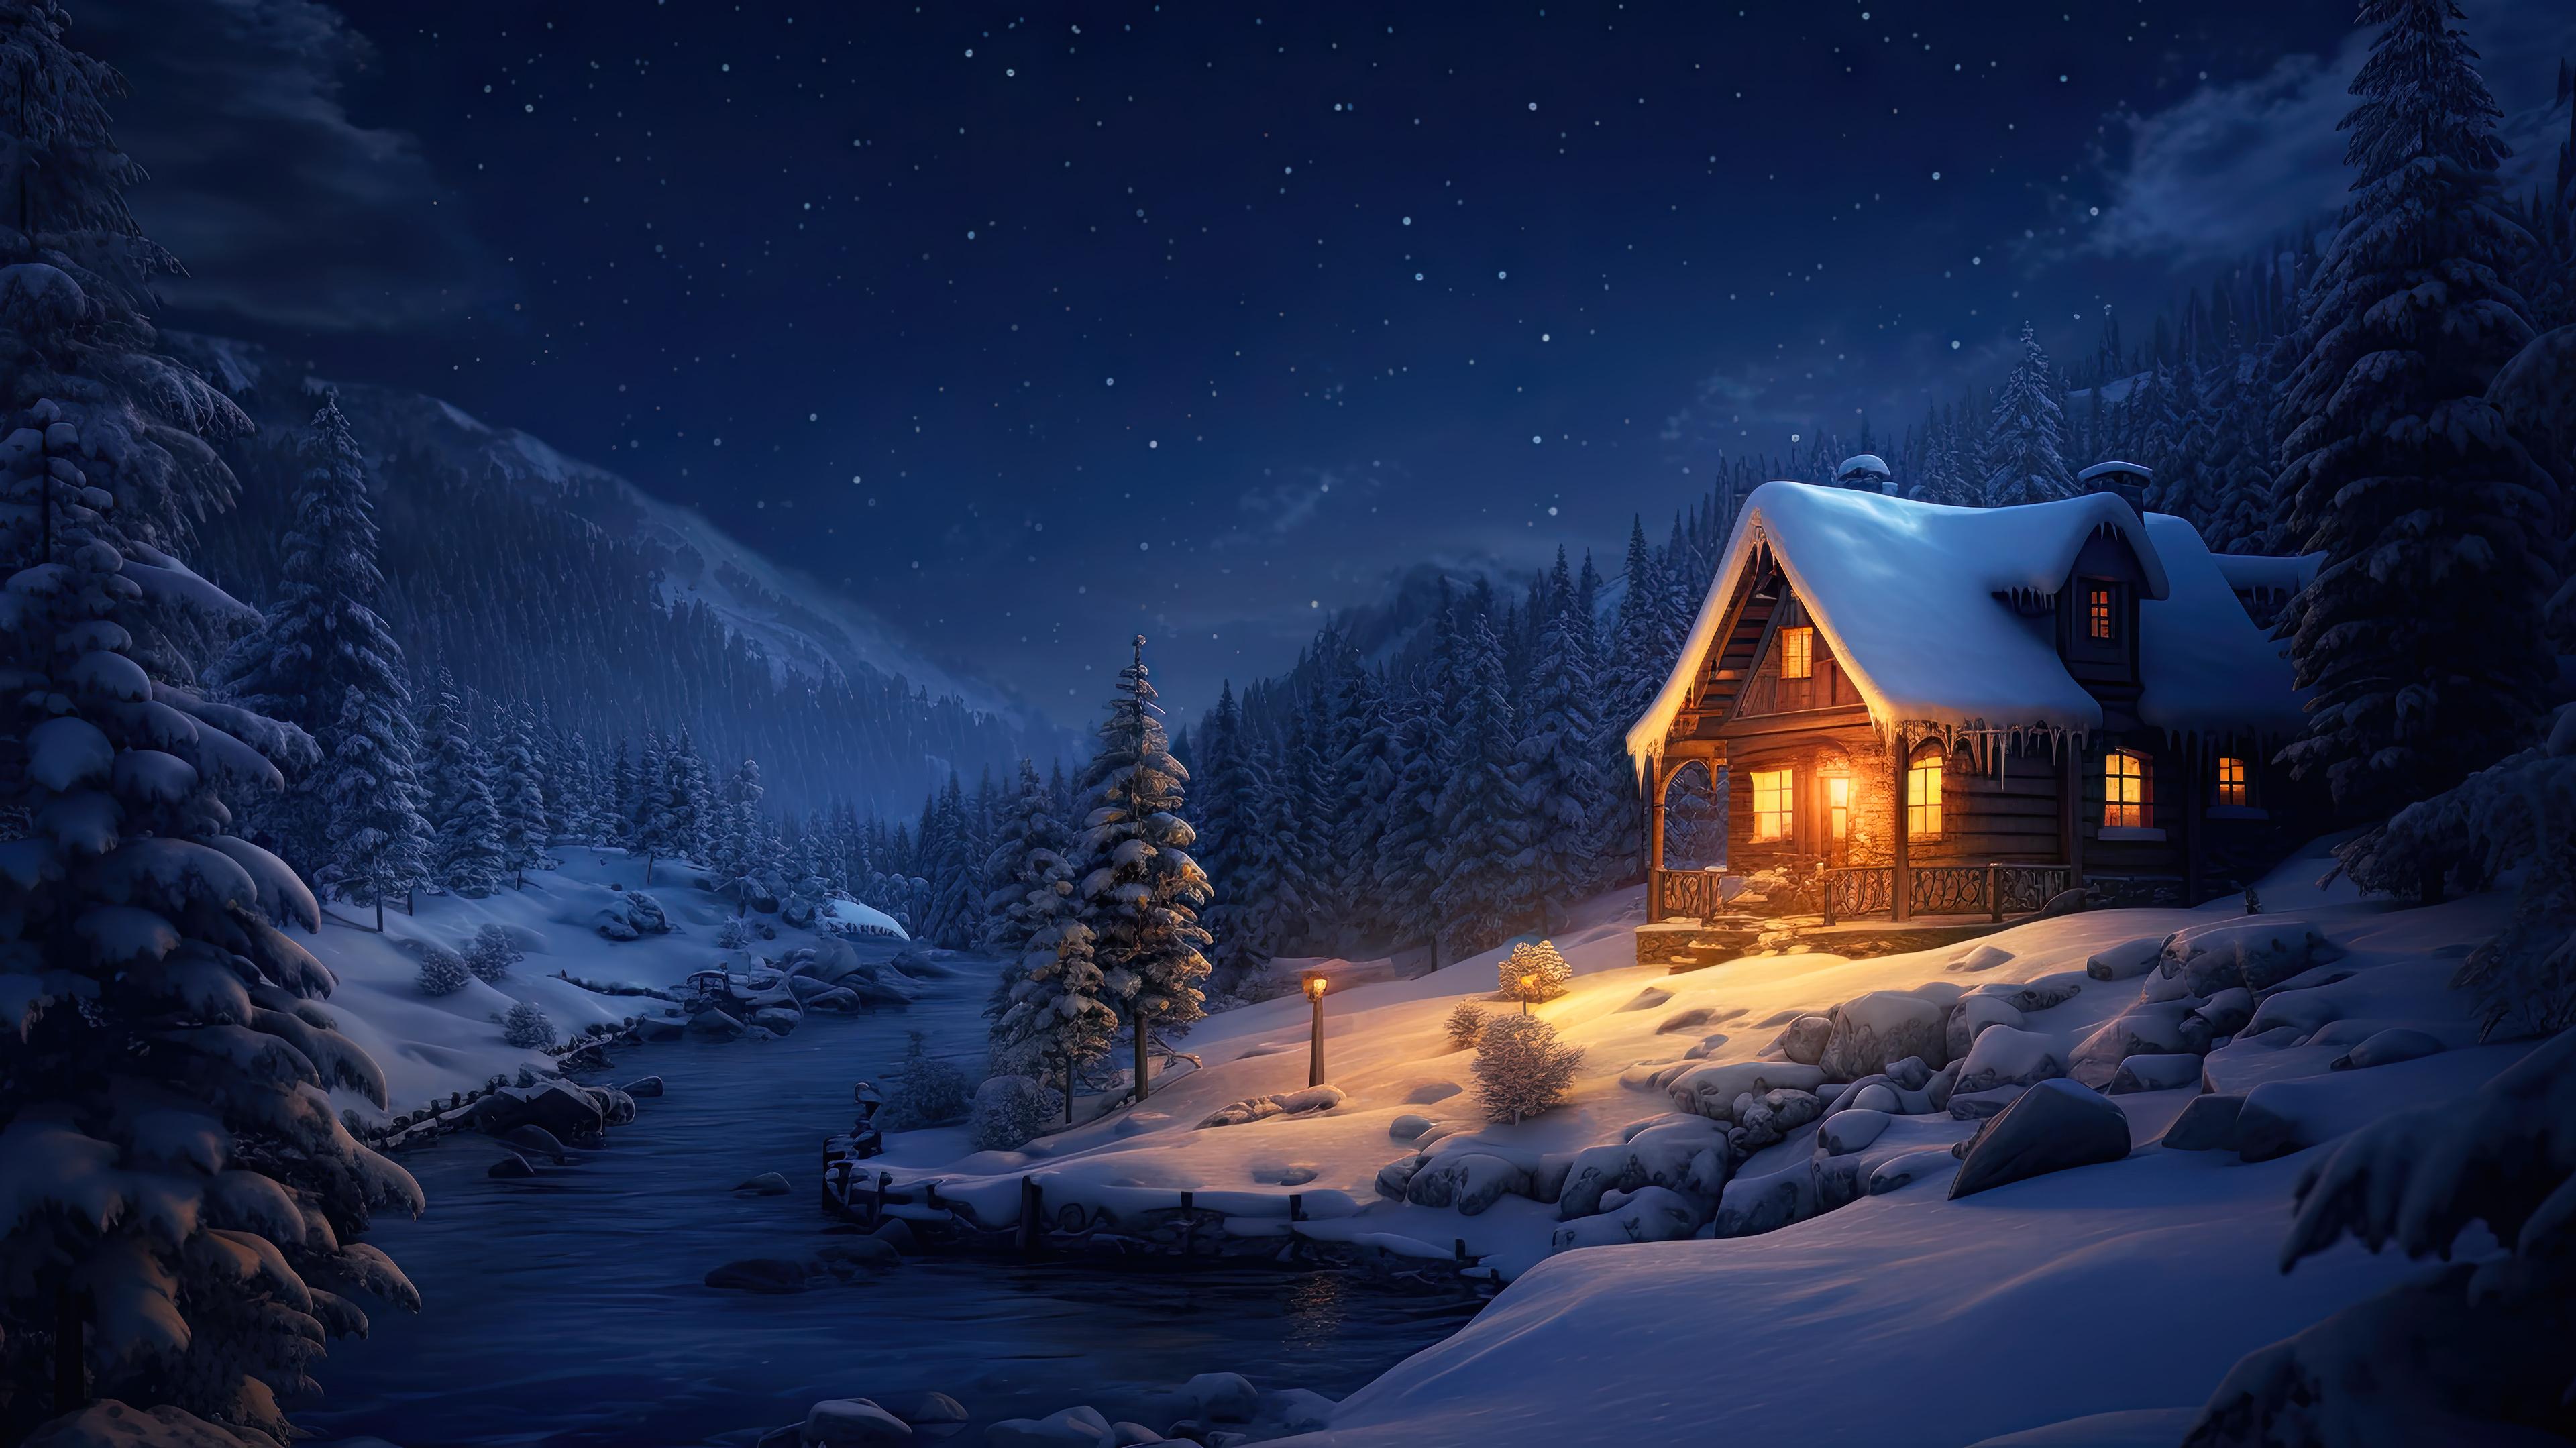 Winter Cabin Snow Forest Night Scenery 4k Wallpaper iPhone HD